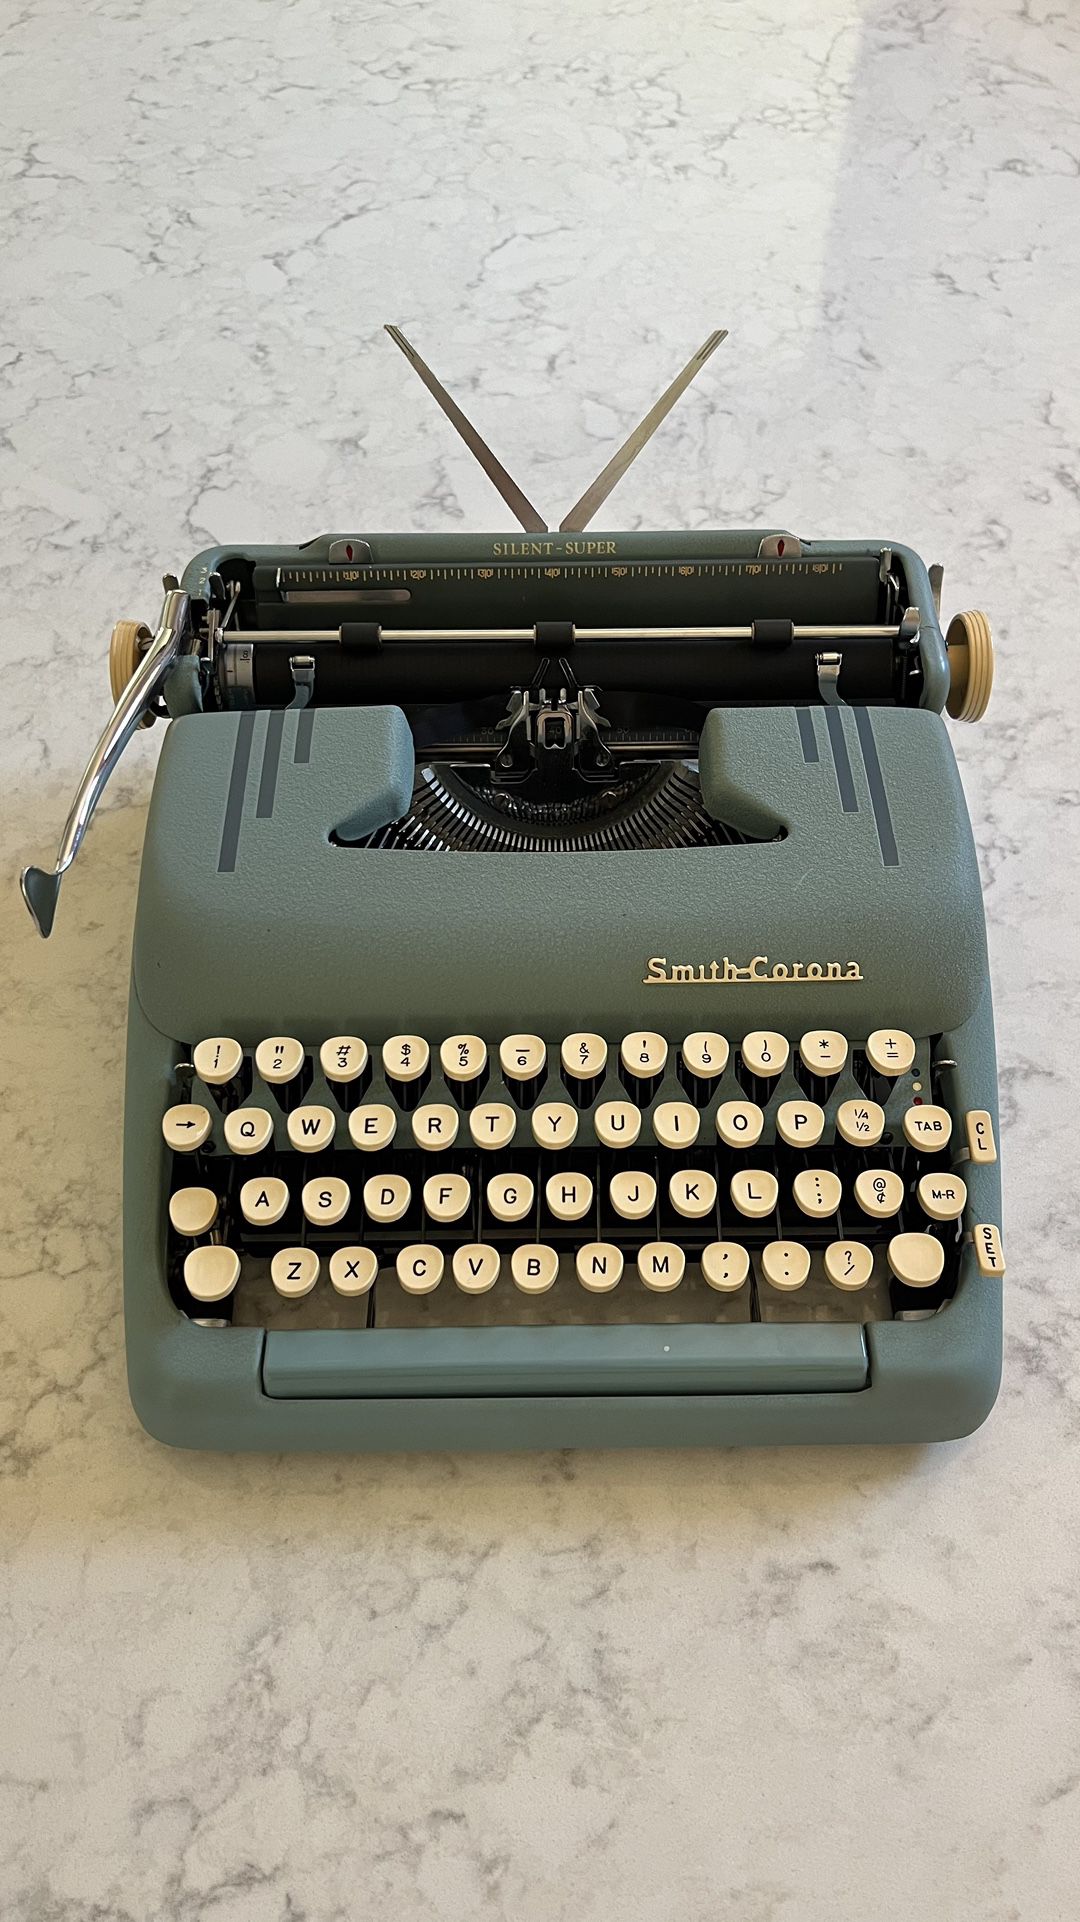 1956 Smith-Corona Silent Super Typewriter